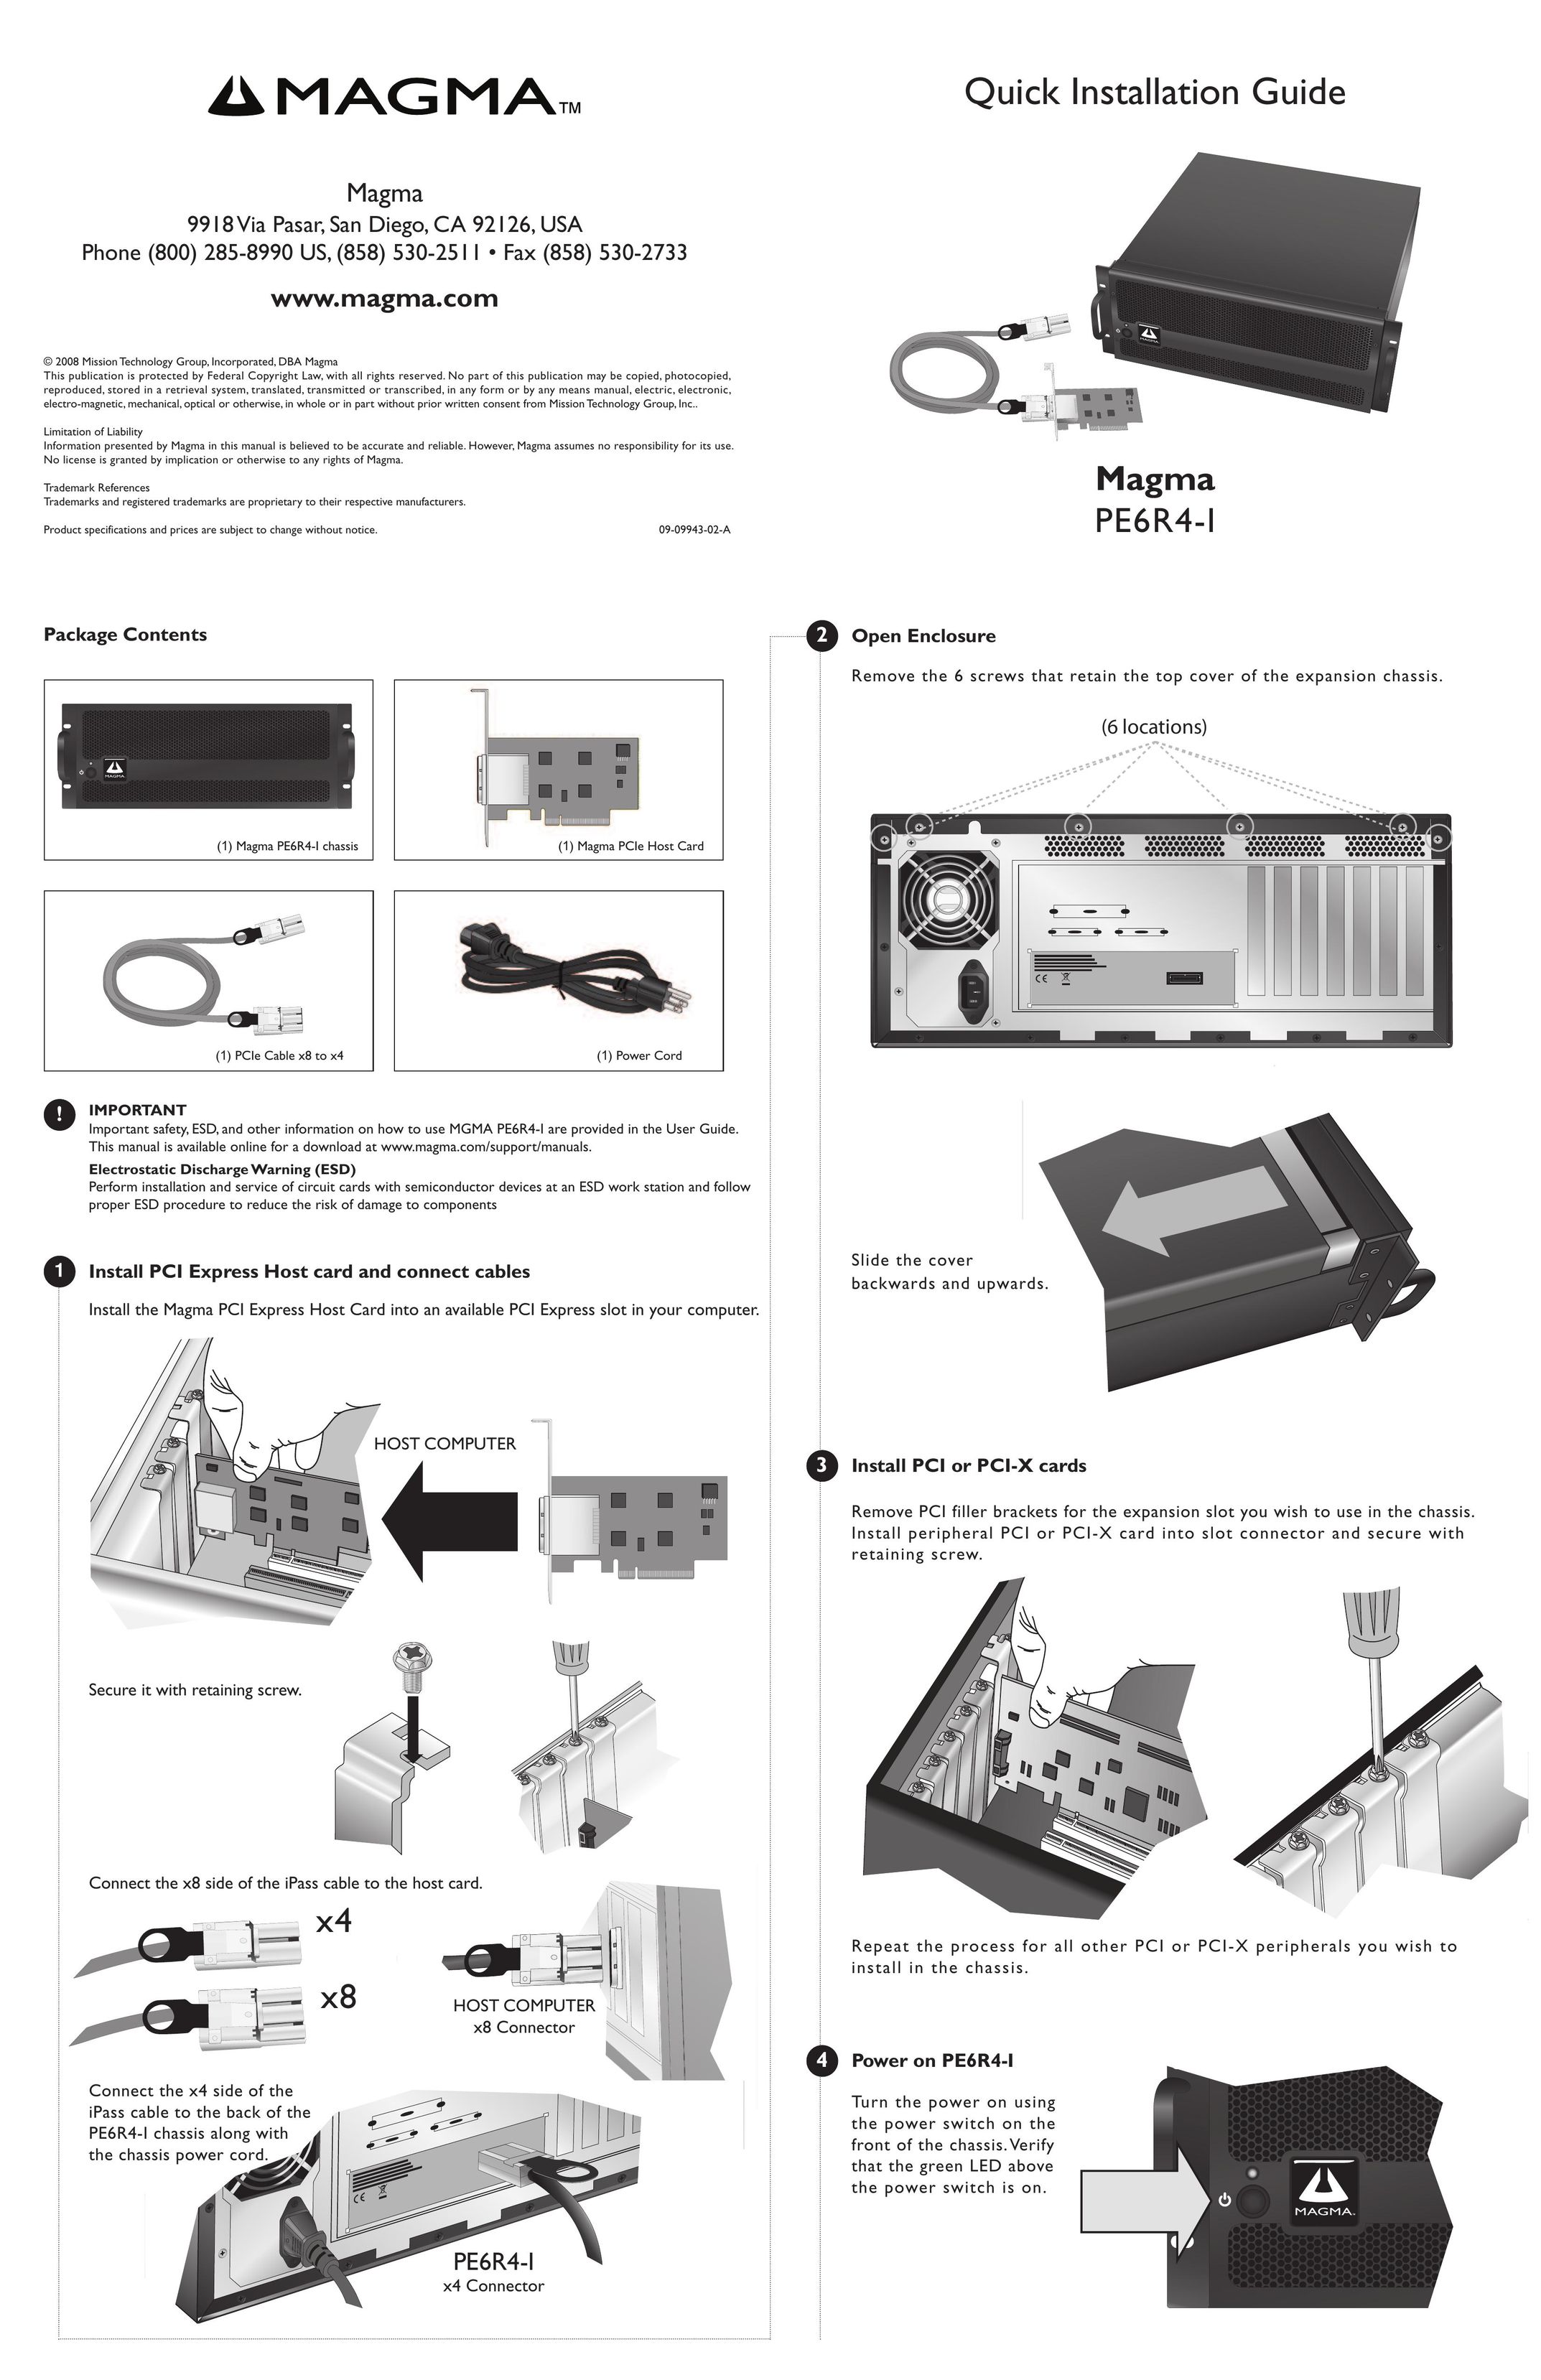 Magma PE6R4-I Computer Hardware User Manual